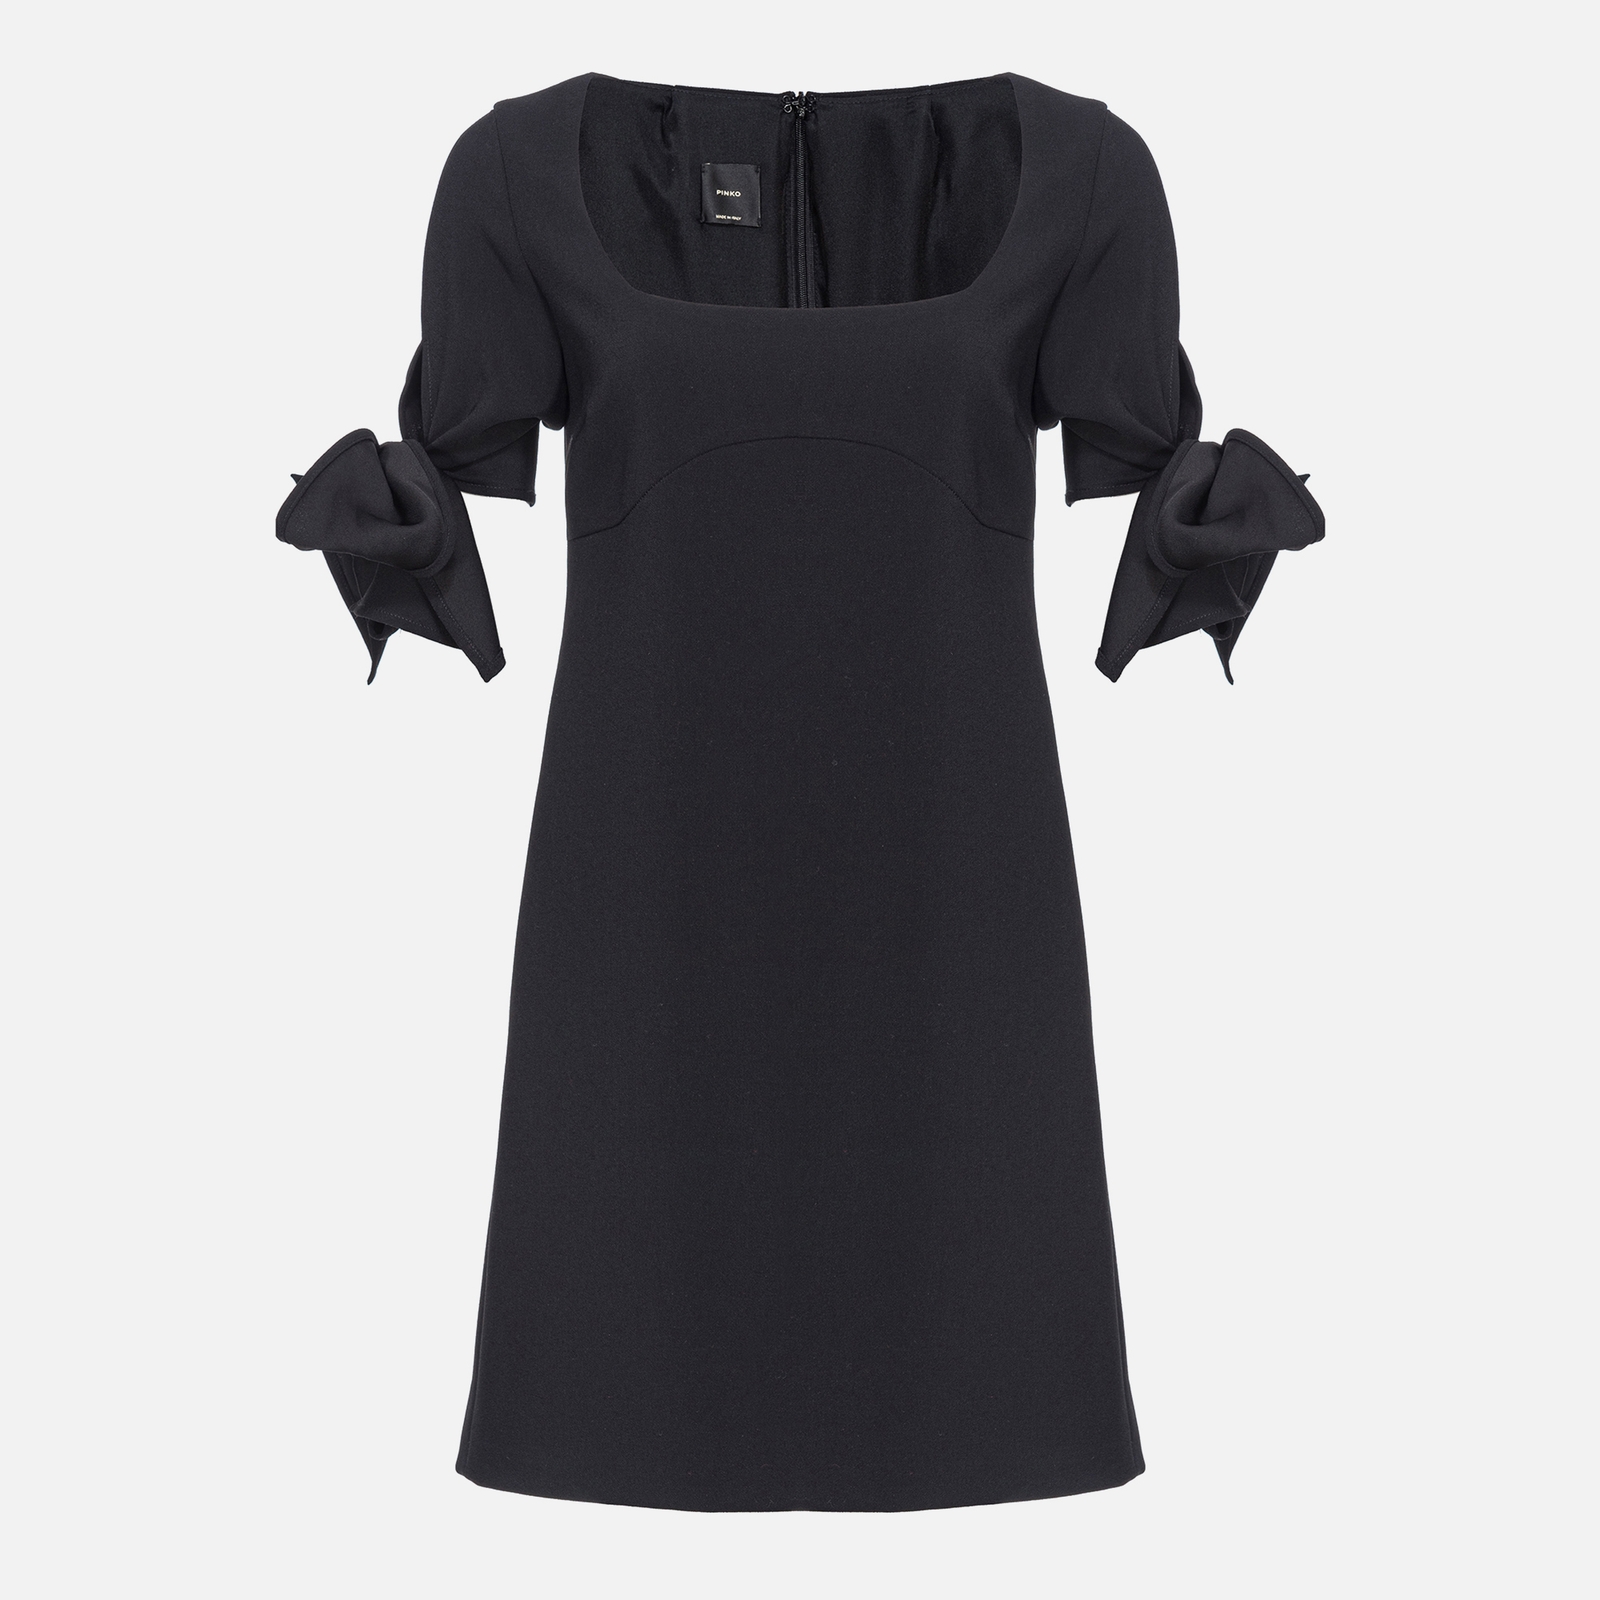 pinko women's verdicchio abito dress - black - xs